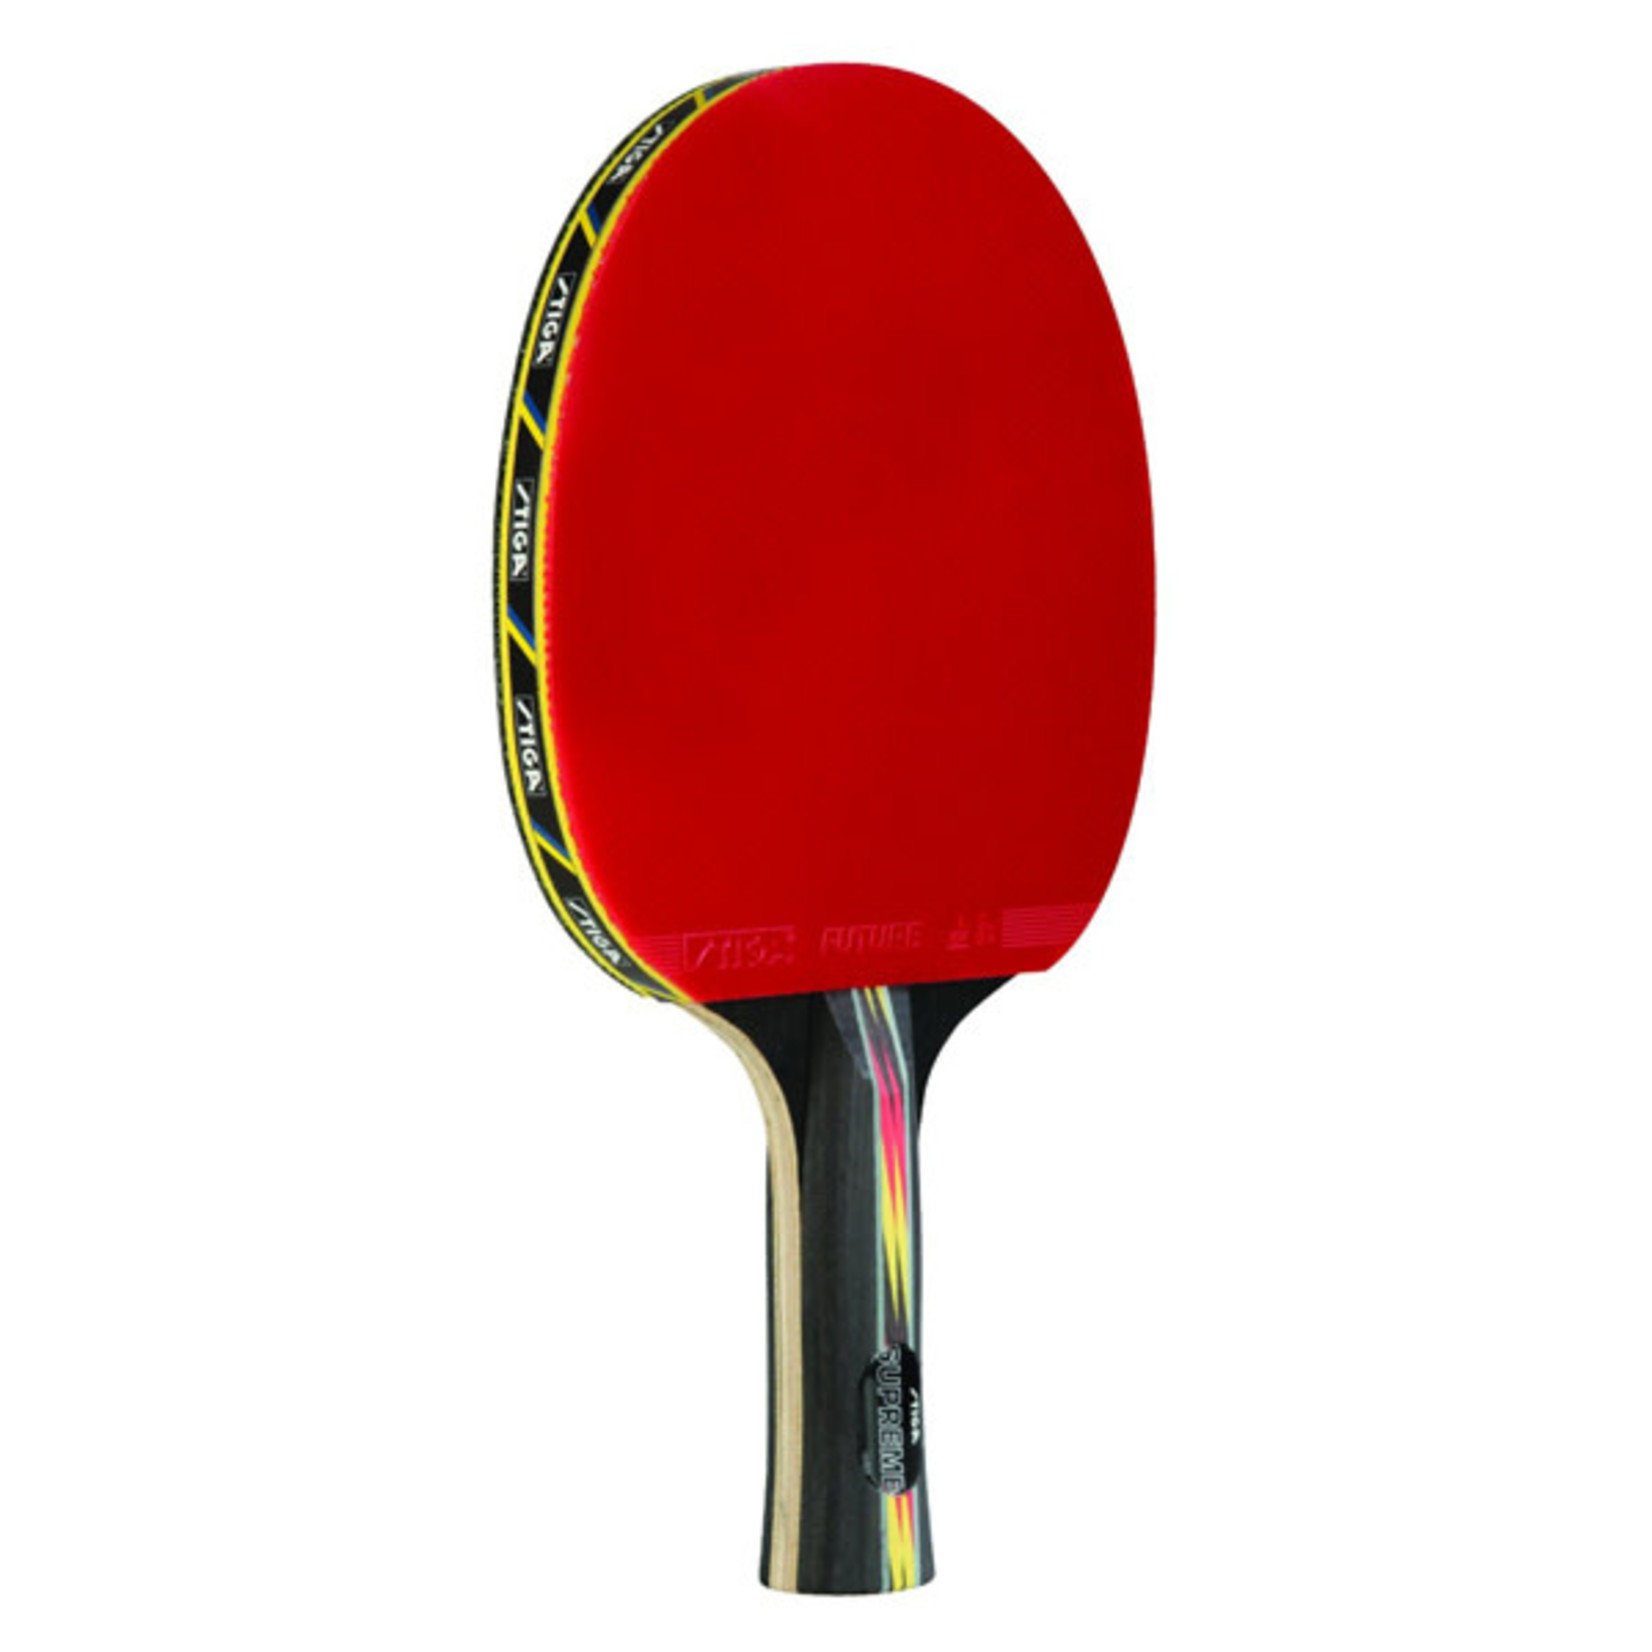 Stiga Stiga Supreme AN Table Tennis Racket